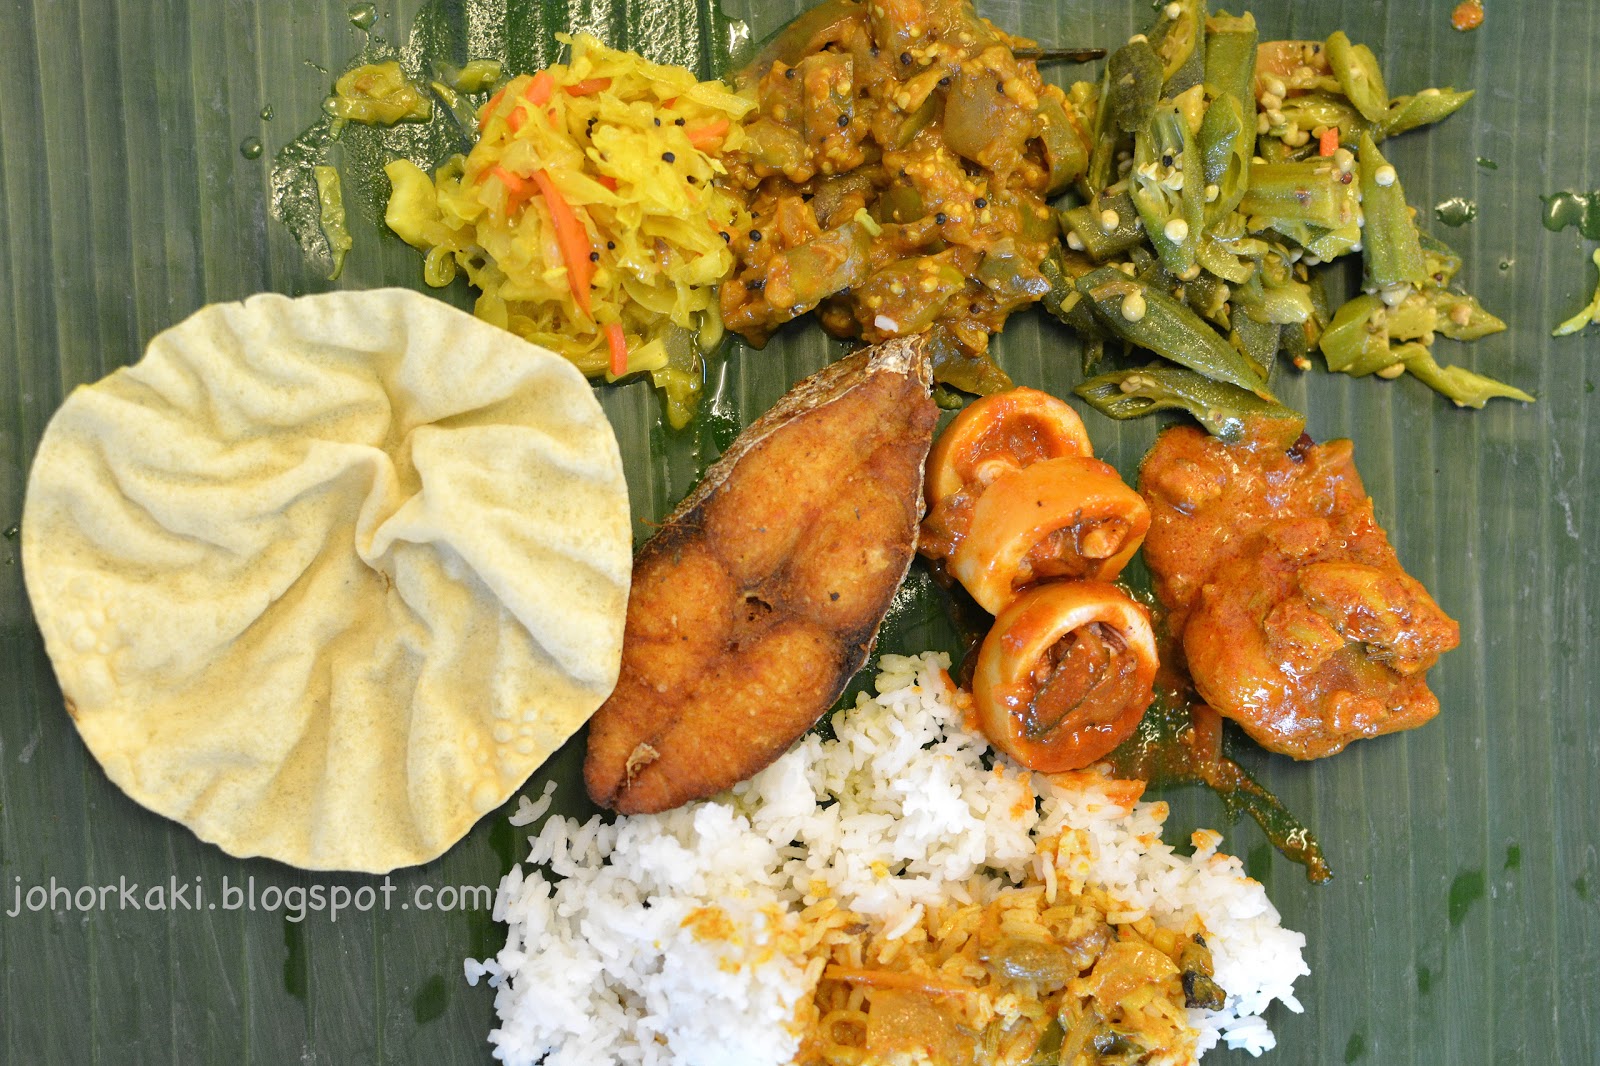 Kerala Indian Restaurant in Johor Bahru |Tony Johor Kaki Travels for